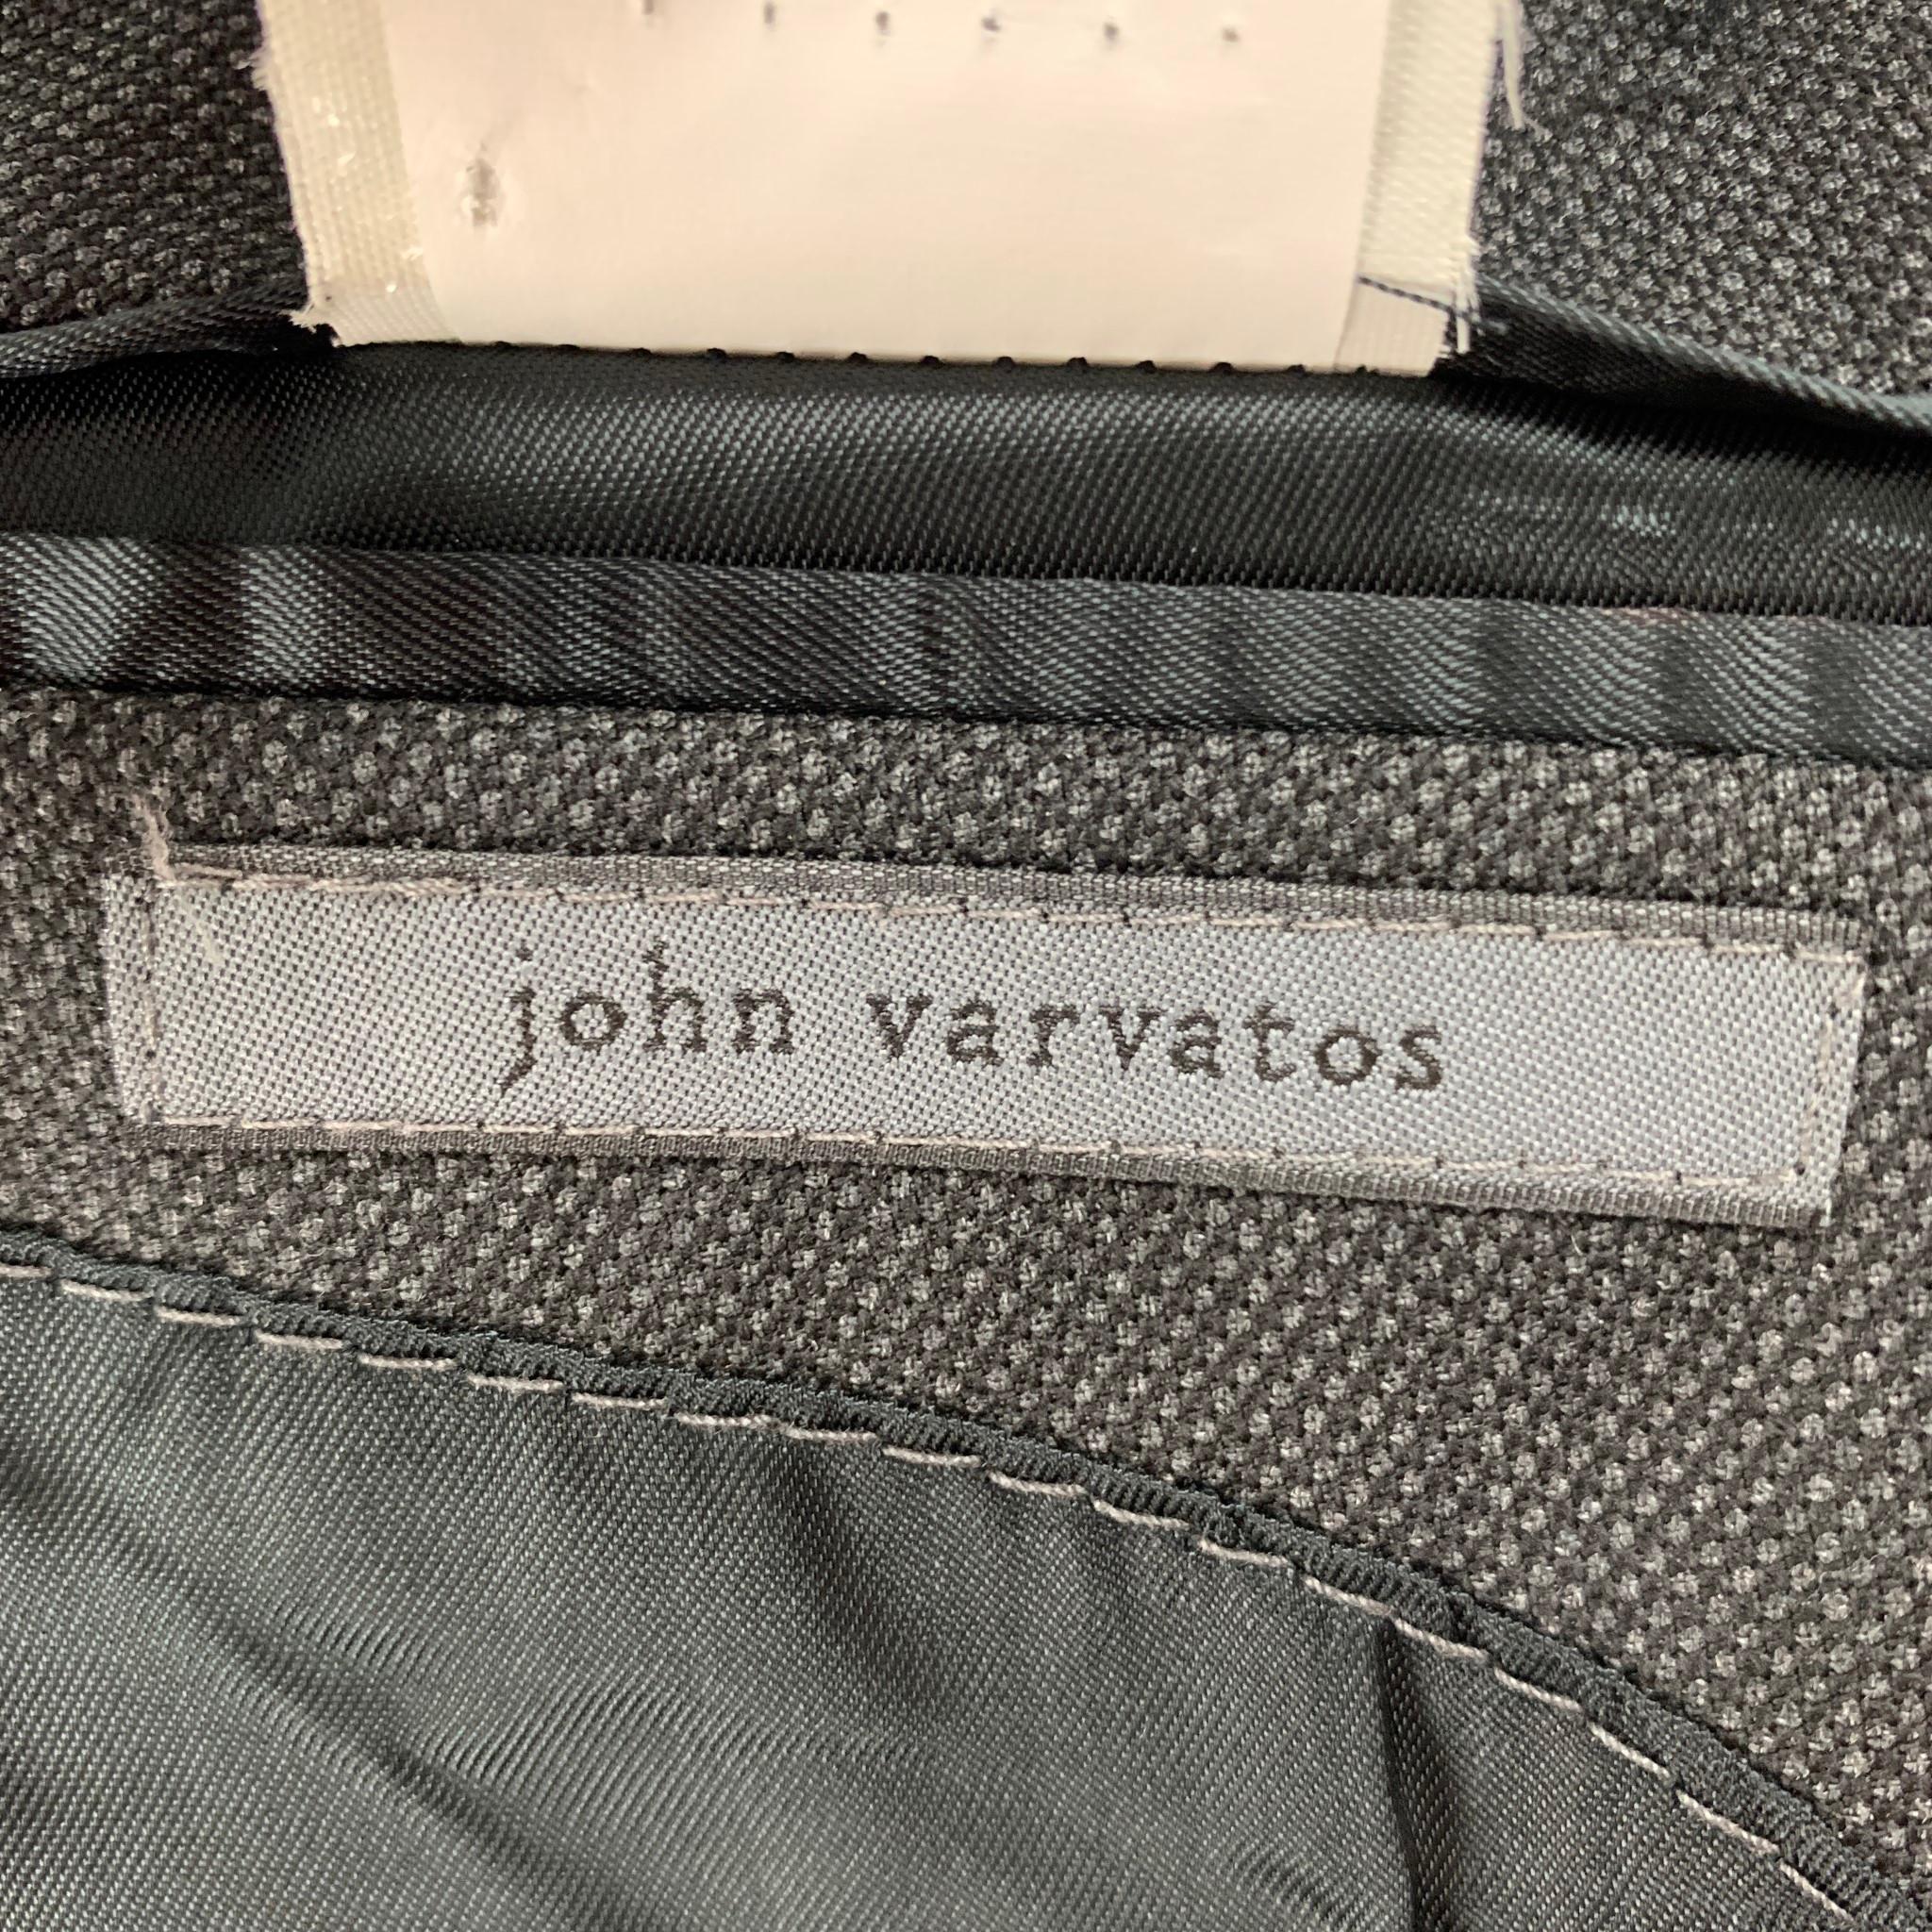 JOHN VARVATOS Size 42 Charcoal Wool Peak Lapel Sport Coat 2